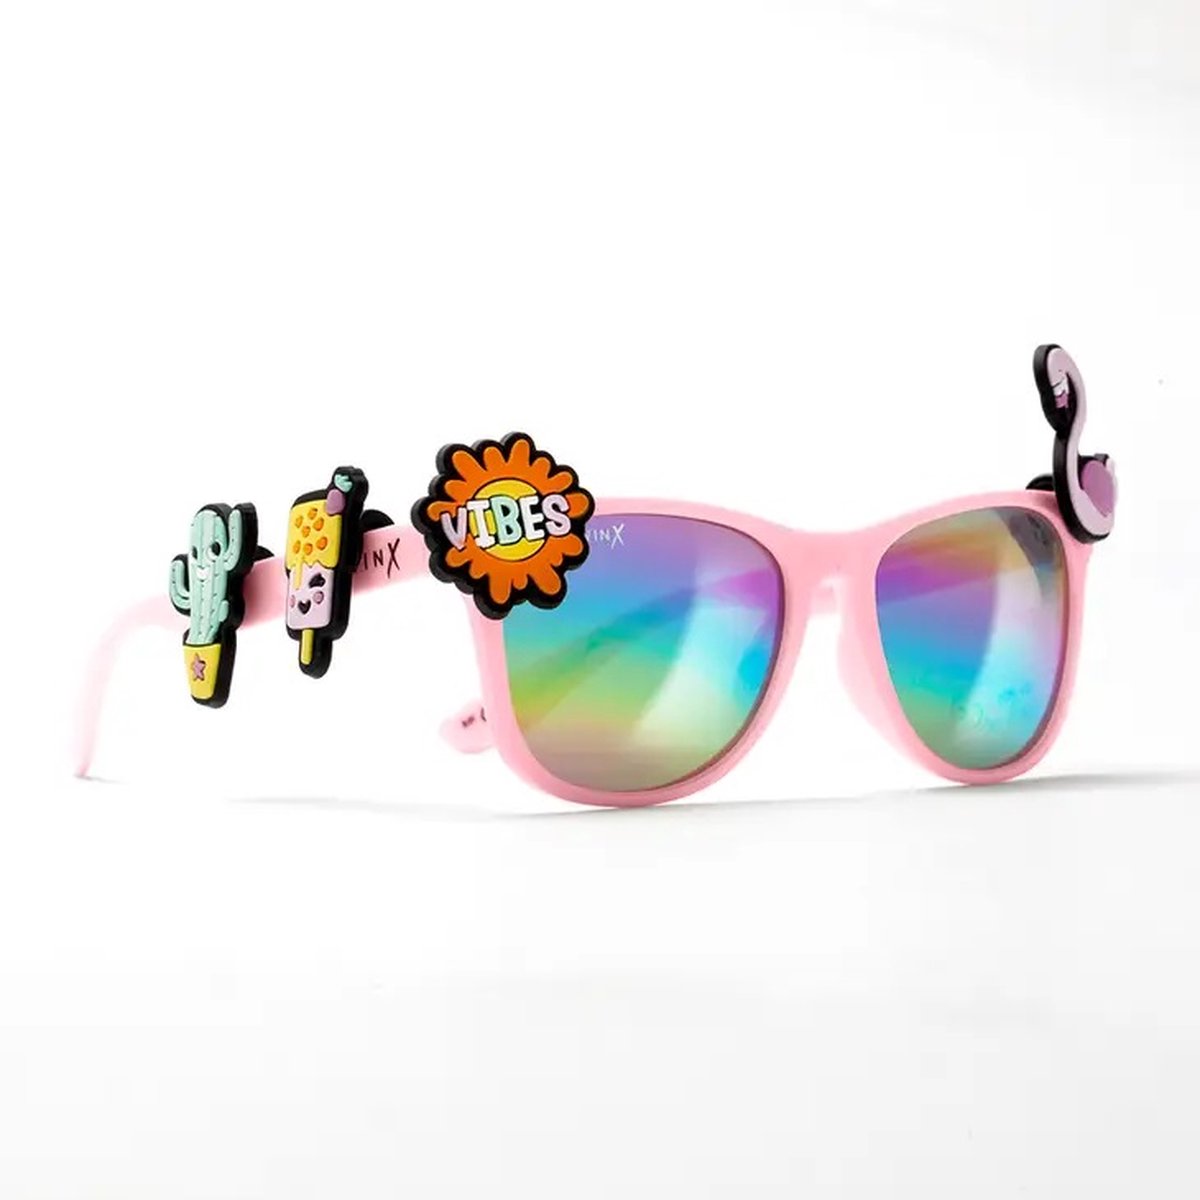 WildWinx - Pink Summer - Kinder zonnebril - kinderzonnebrillen meisjes - vanaf 3 jaar - uv400 bescherming - zonnebril - bedels - vintage - hip - stoer - design